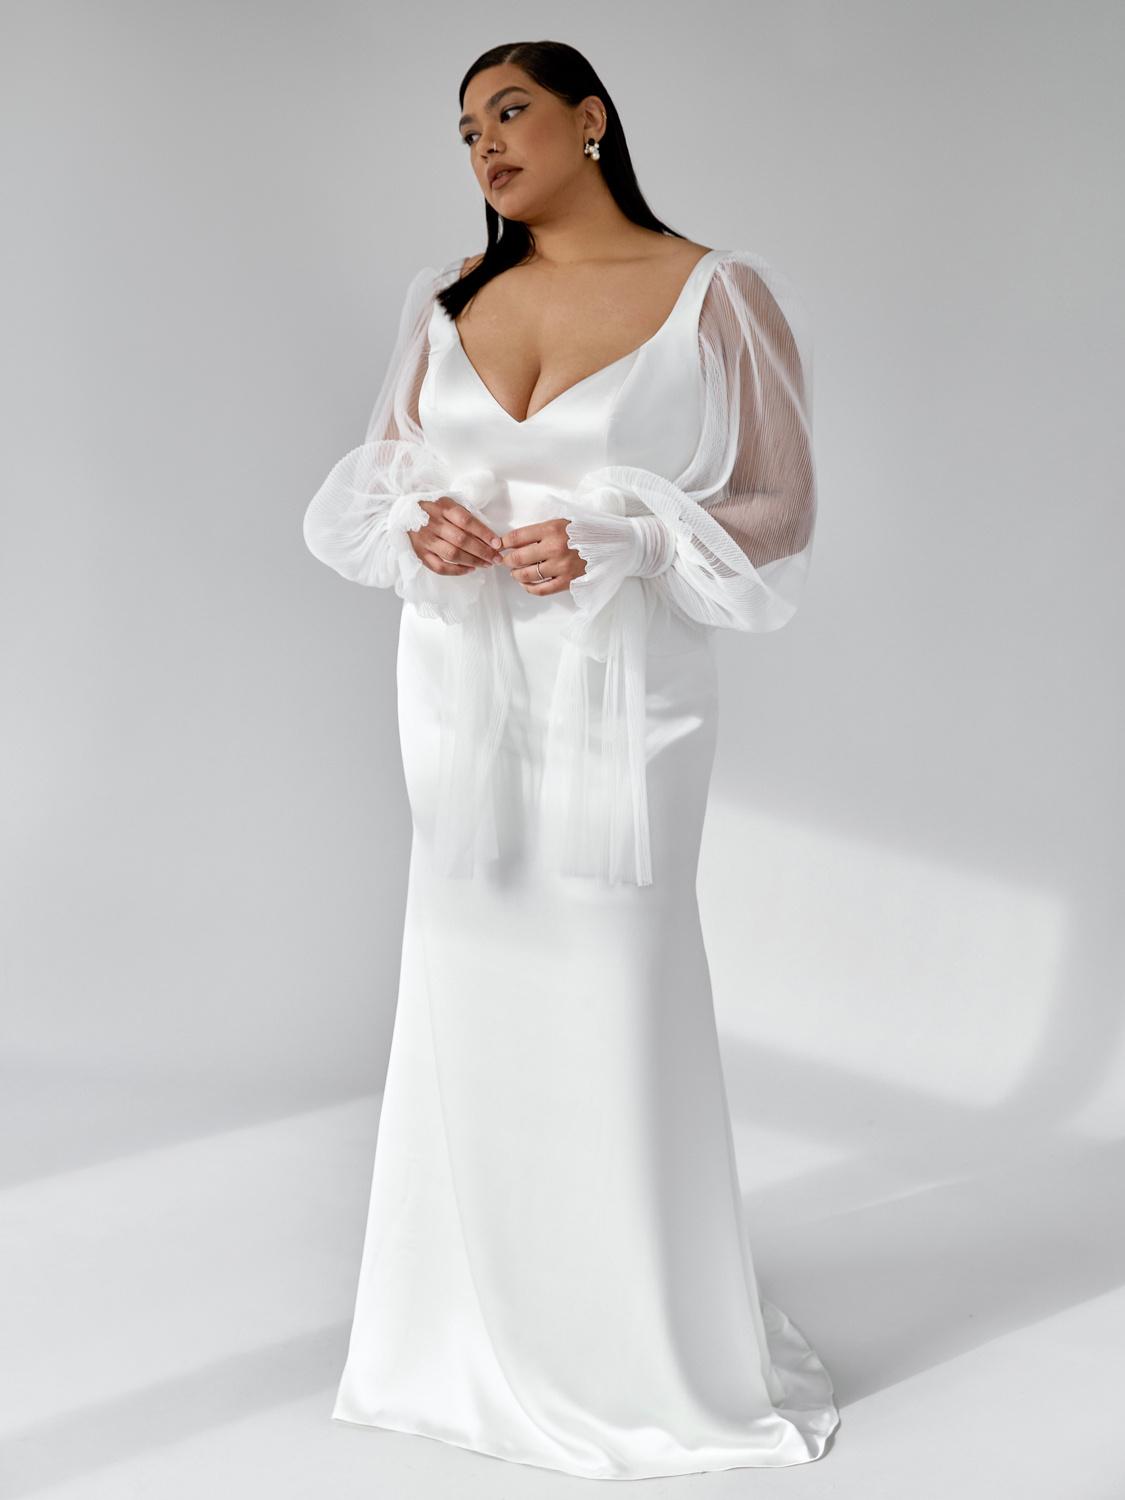 Best Shapewear For Silk Wedding Dress Photos, Download The BEST